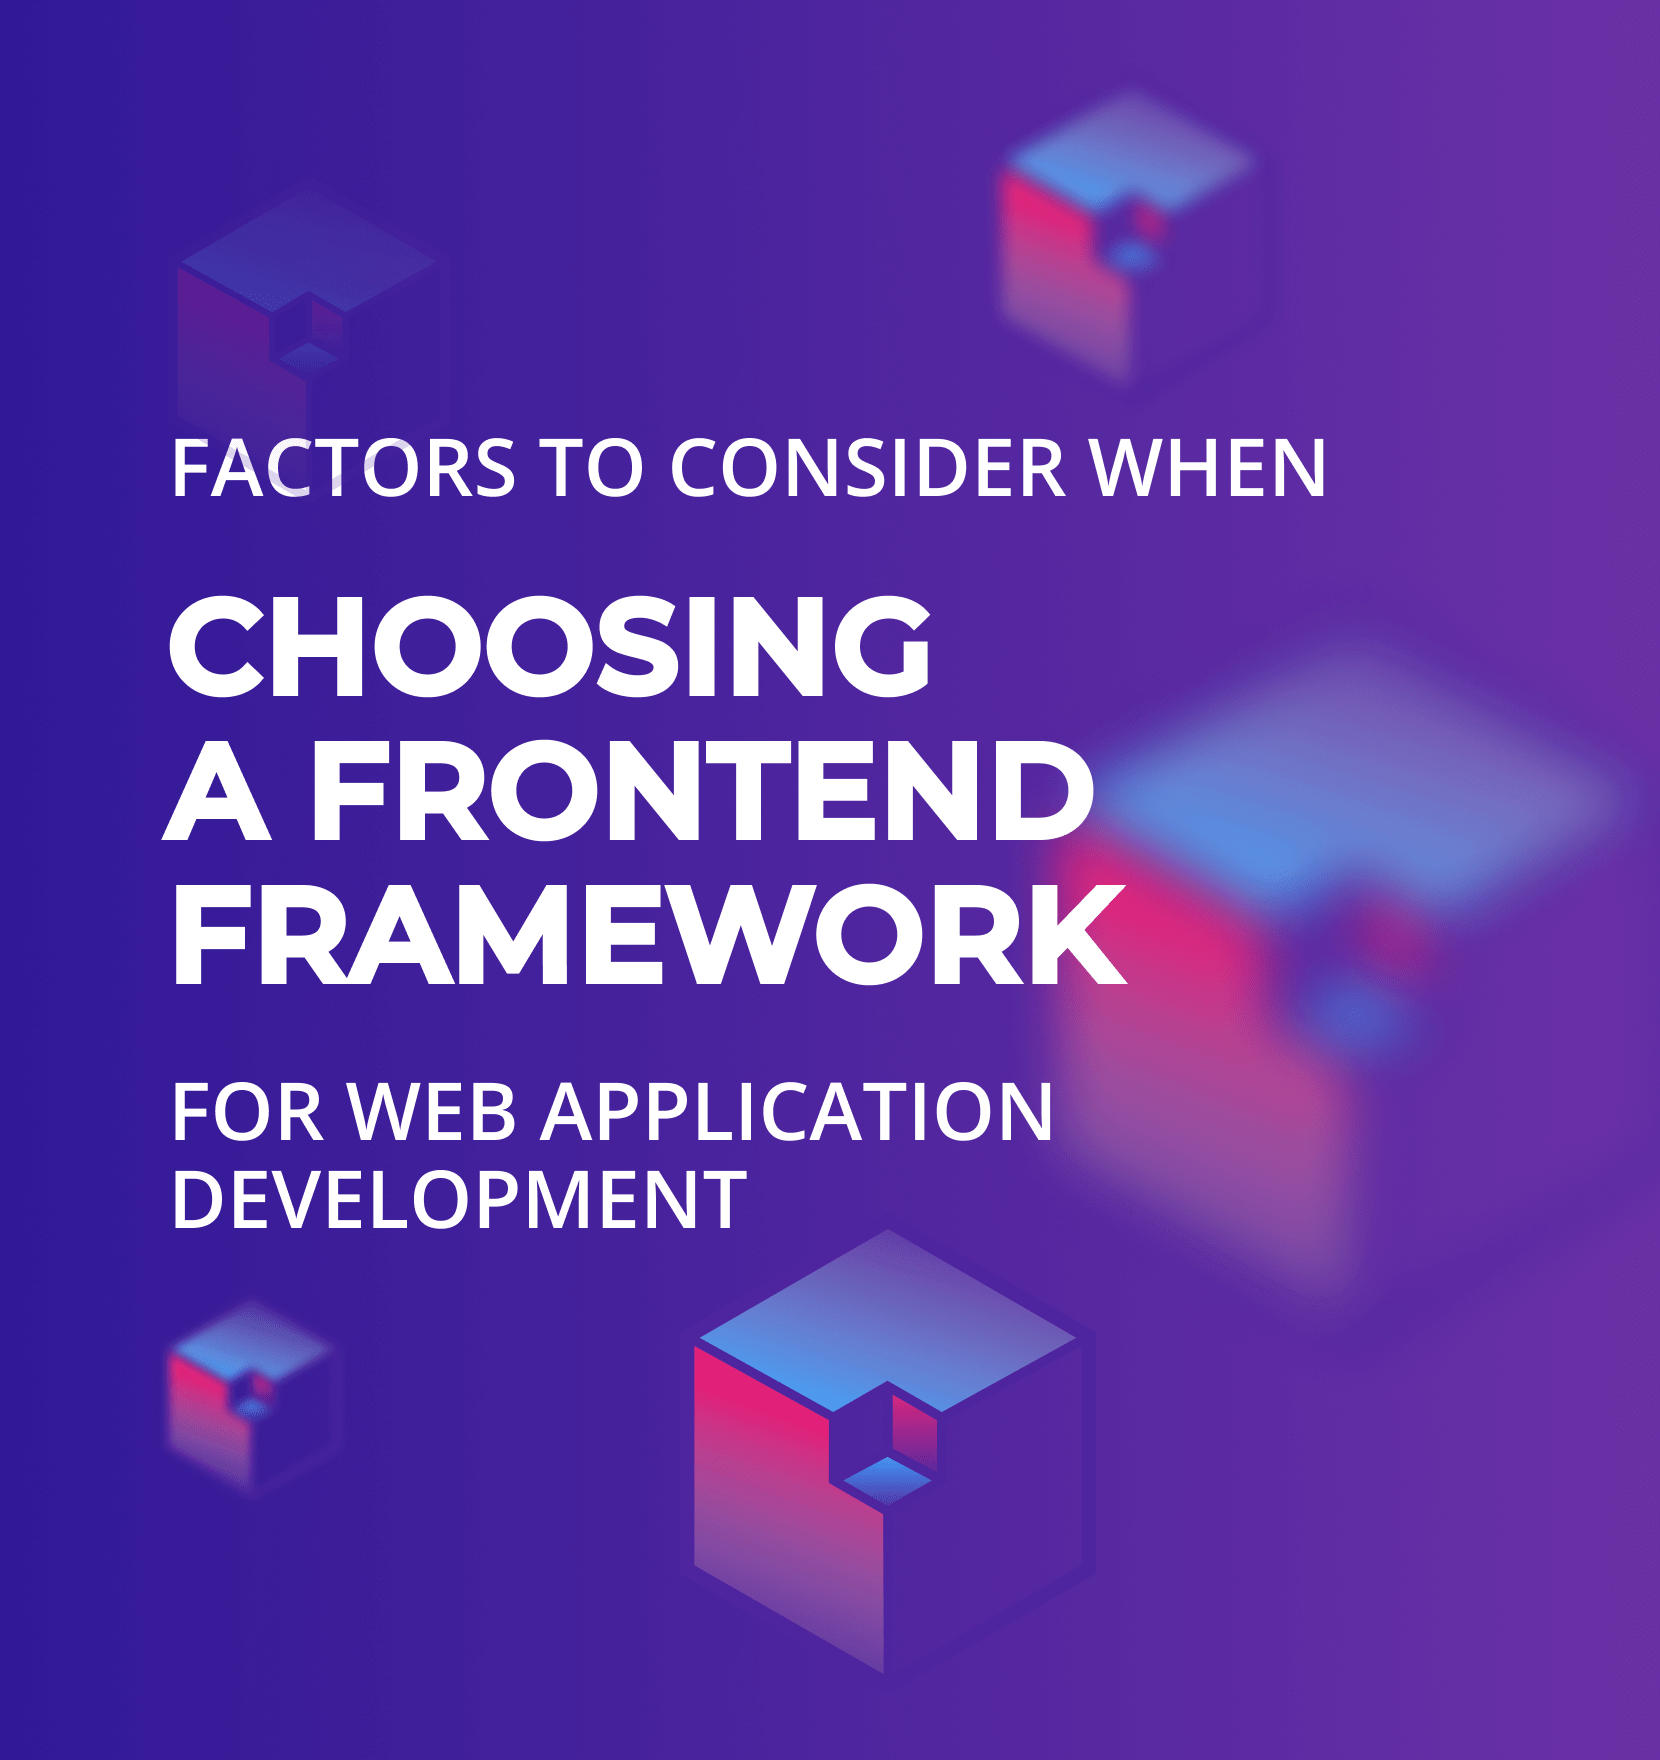 Factors to consider when choosing a frontend framework for web application development